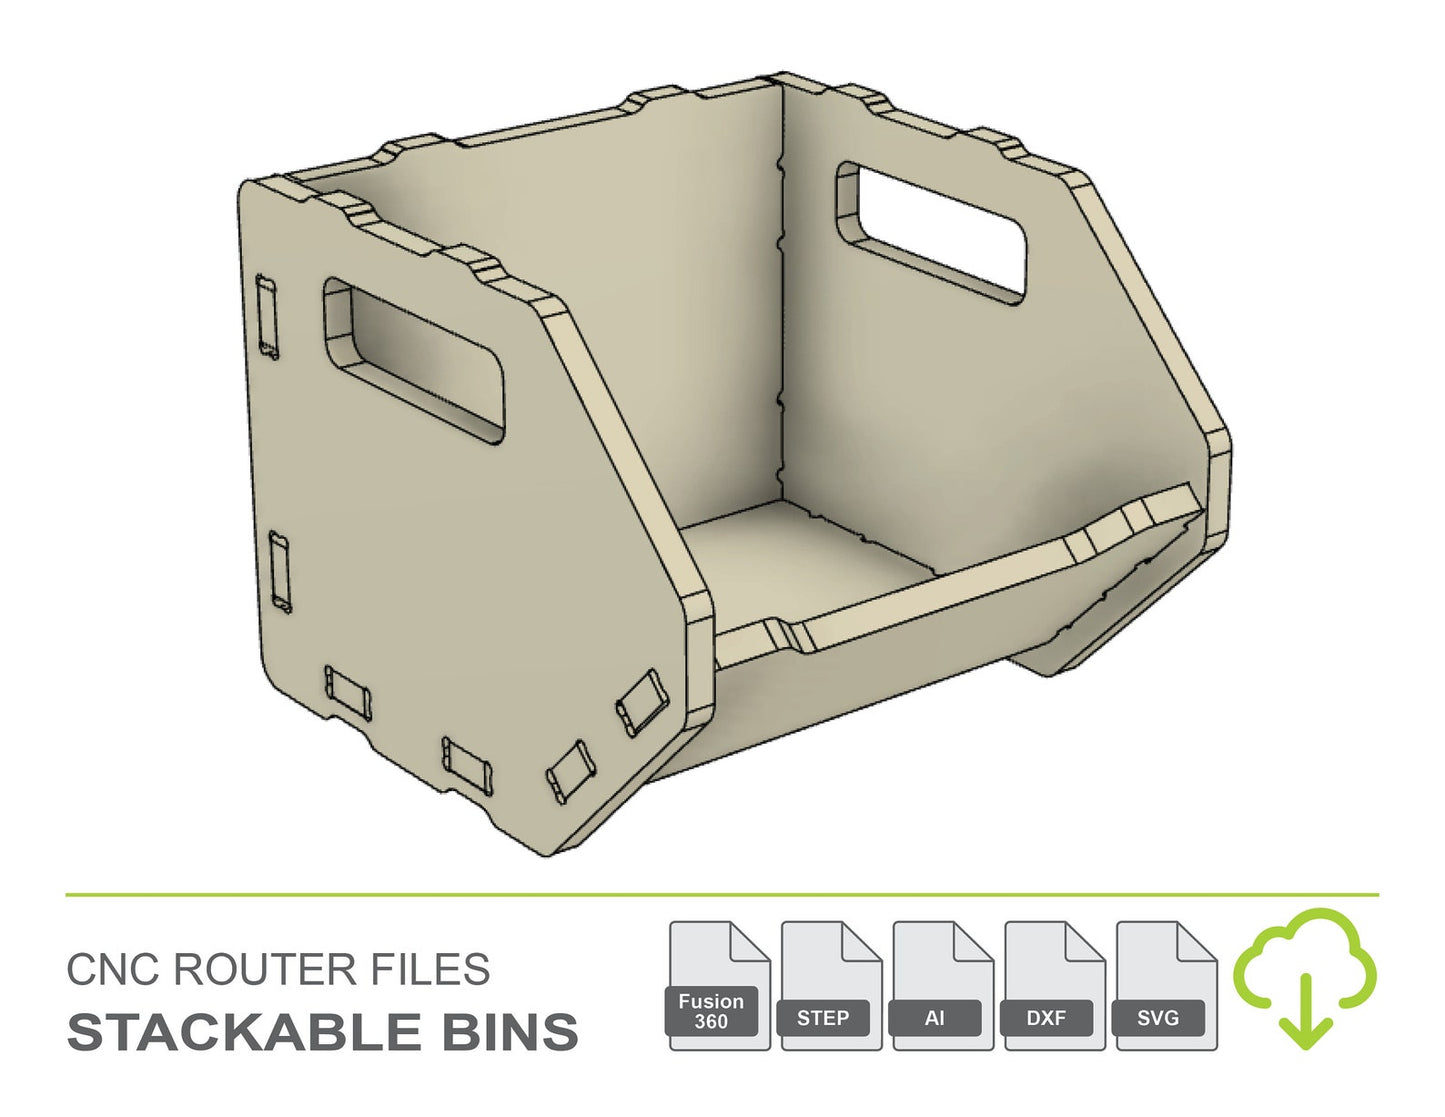 CNC Router Files Stackable Storage Bins Organizer 3D Model